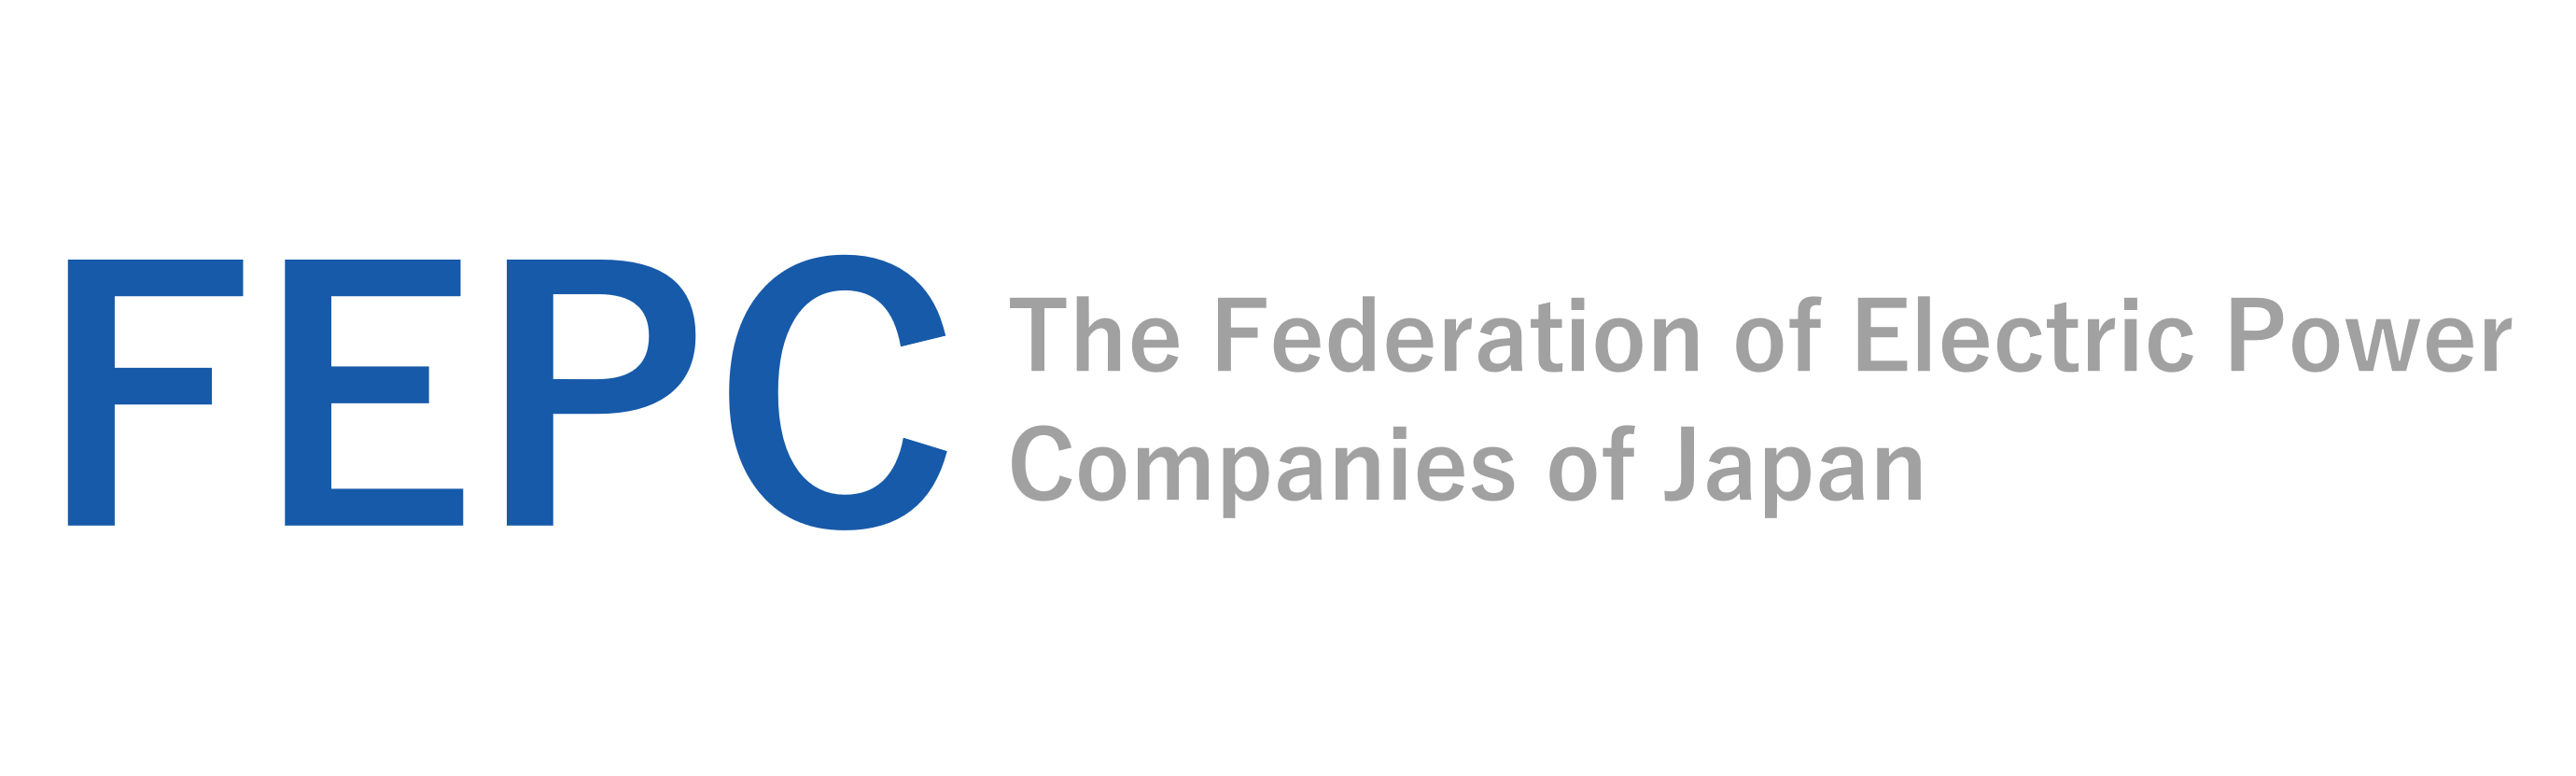 Federation of Electric Power Companies logo